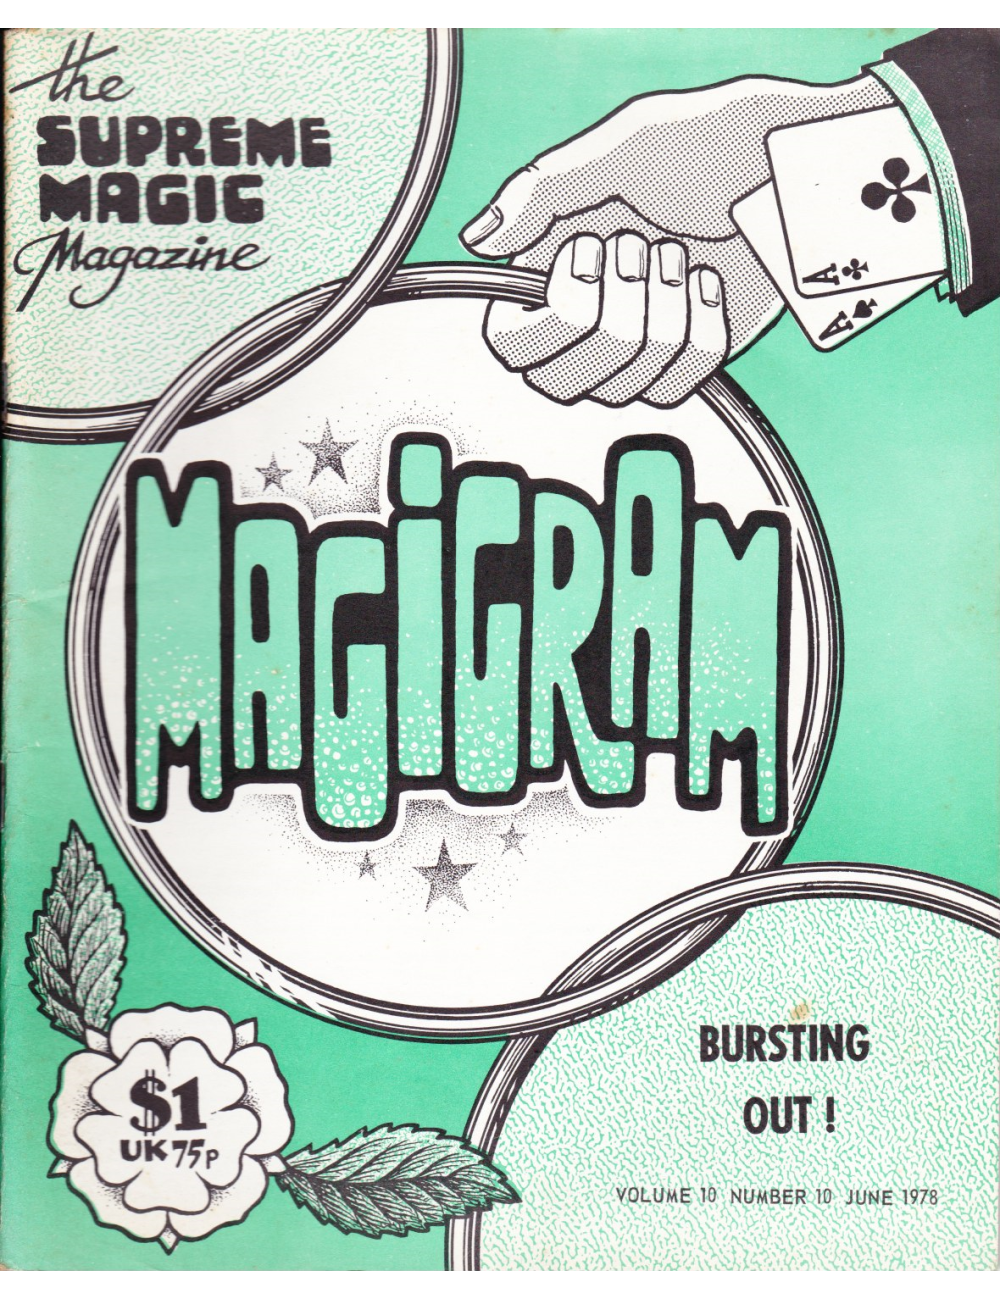 MAGIGRAM The Supreme Magic Magazine Volume 10, Number 10, June 1978